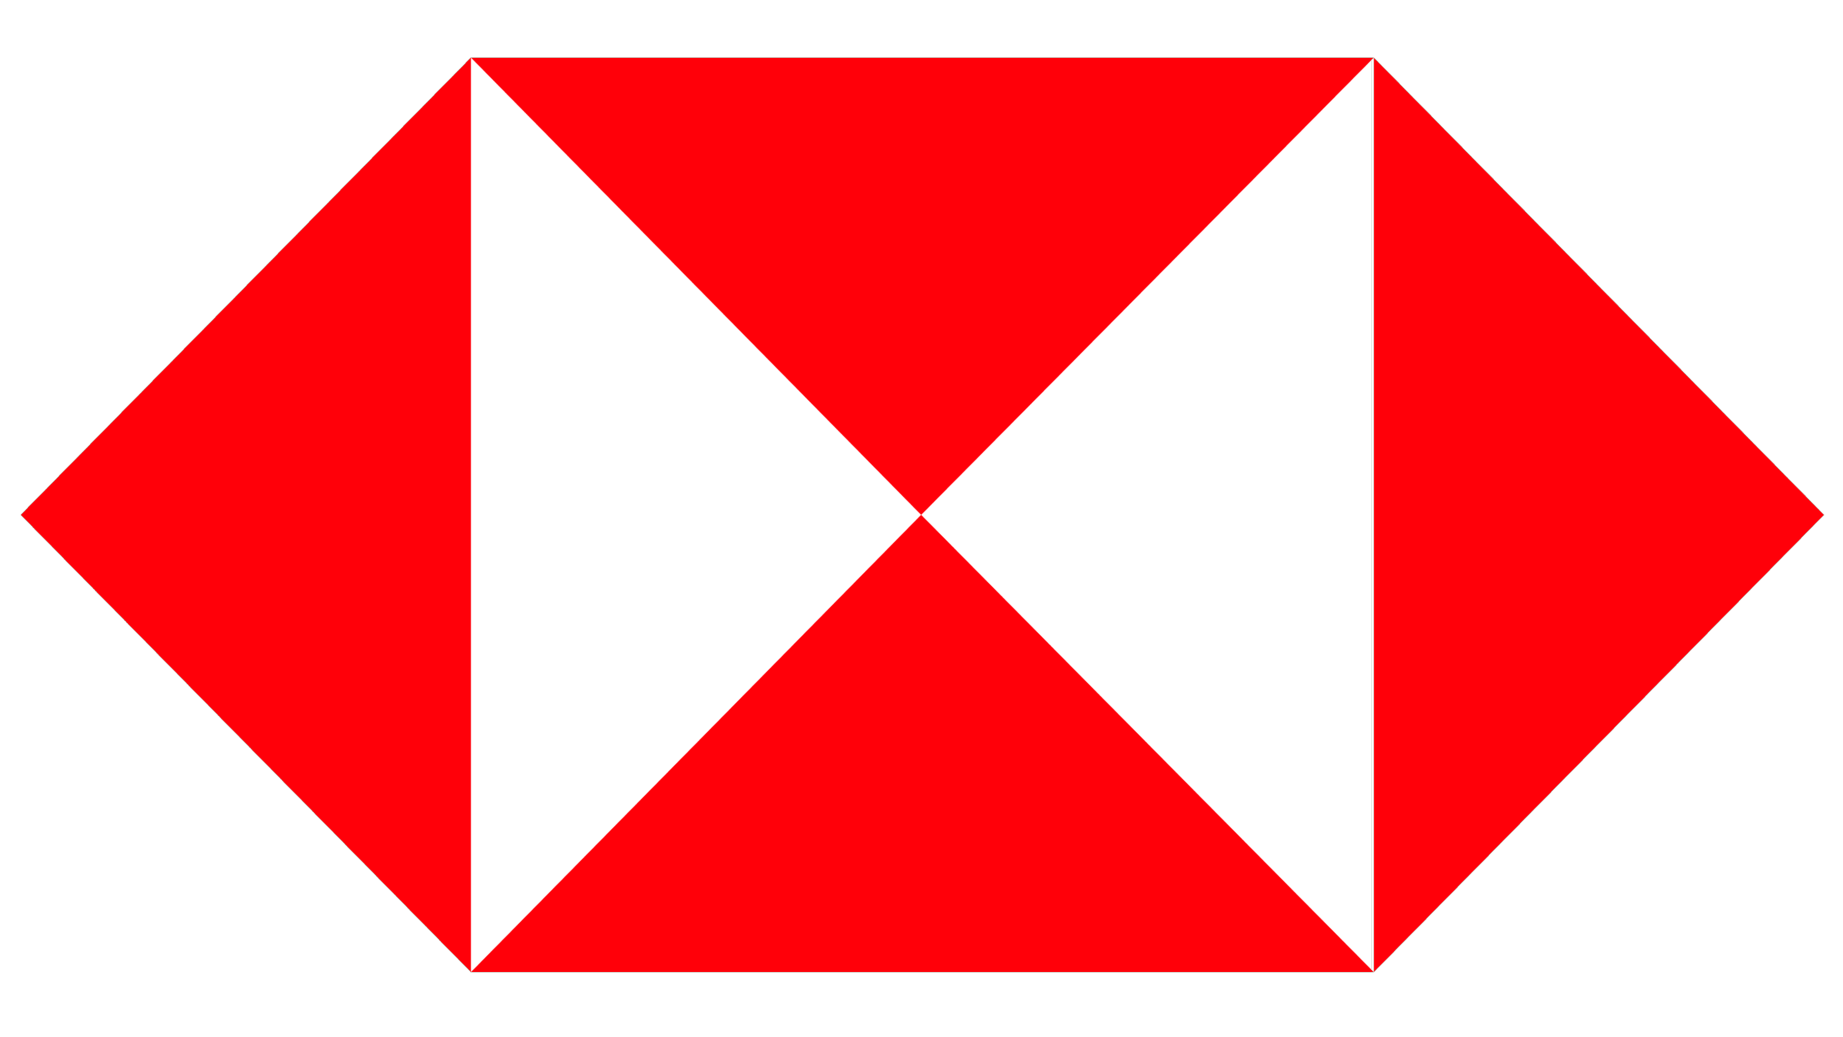 Hsbc symbol